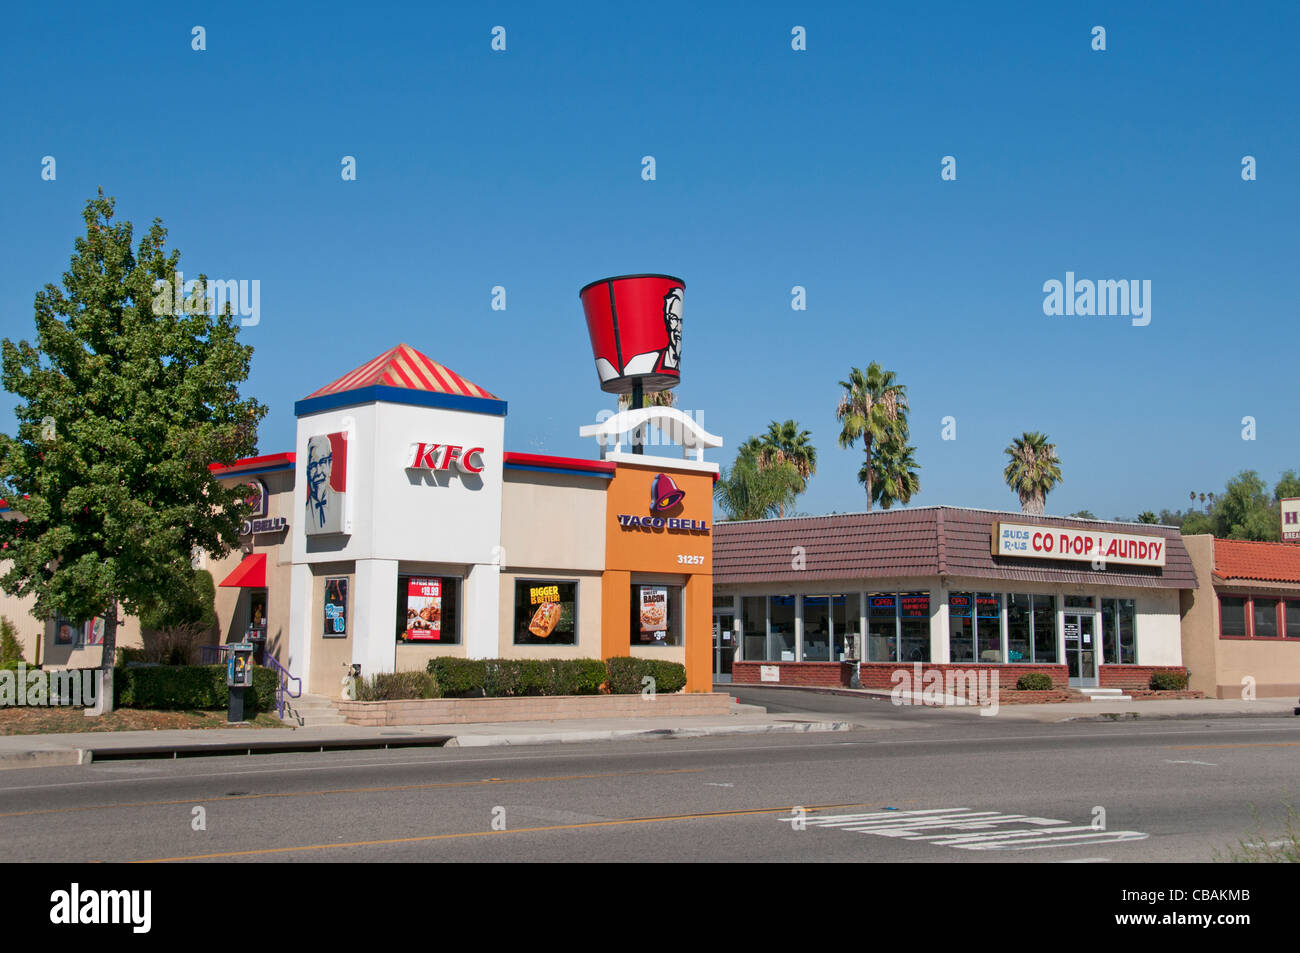 KFC Kentucky Fried Chicken Lake Elsinore California United States of America Stock Photo